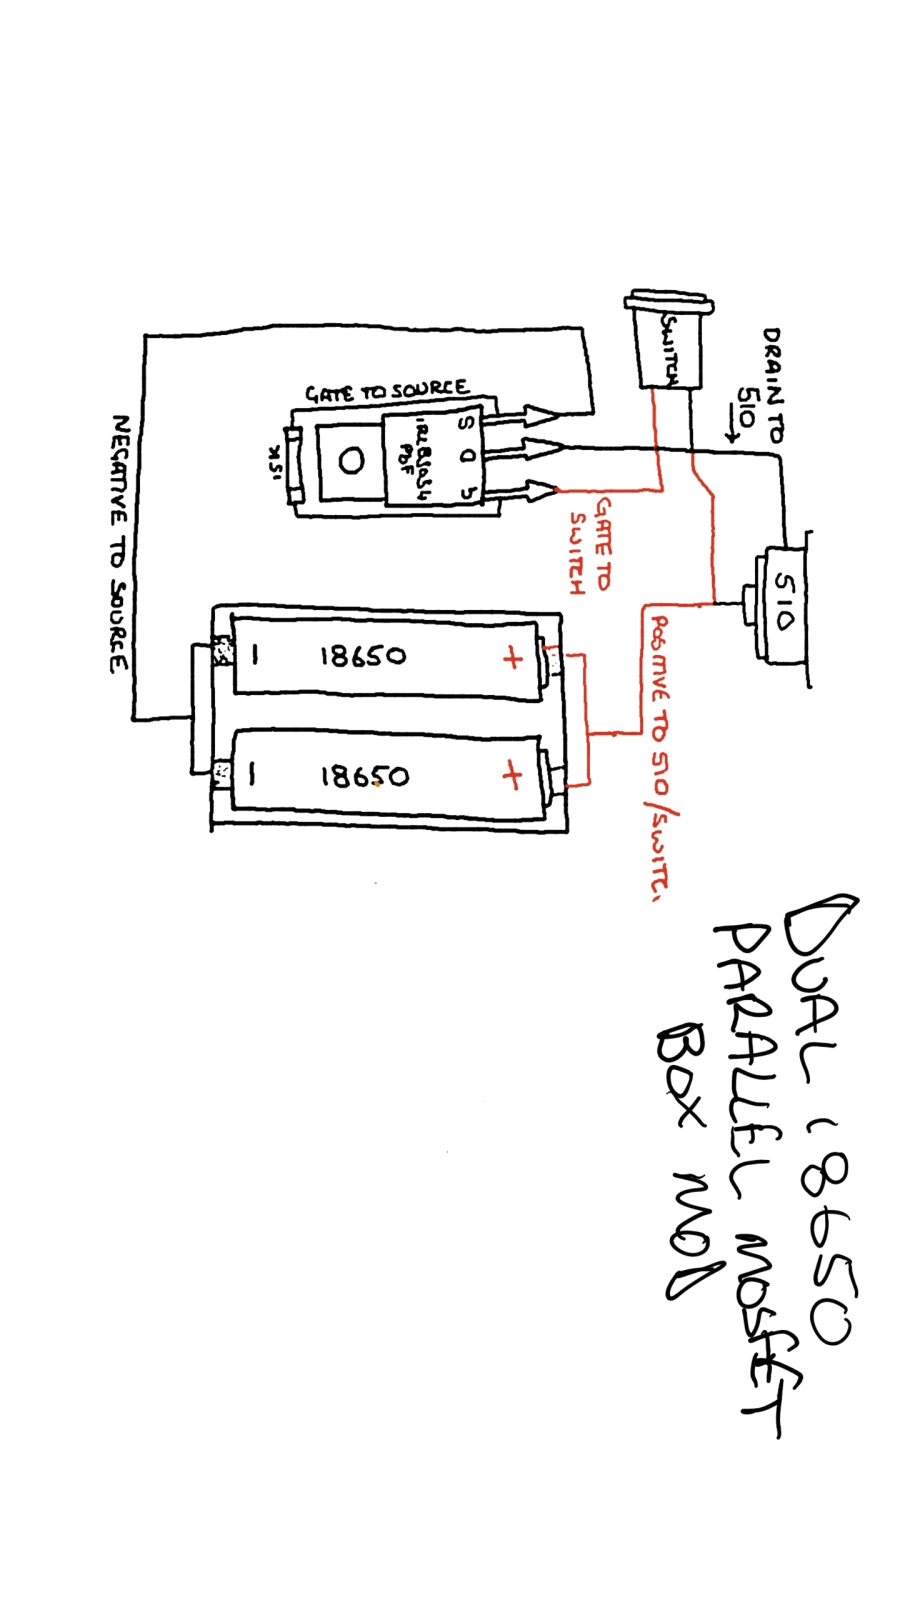 wiring diagram a parallel box mod wiring diagram sort mod meter wiring diagram